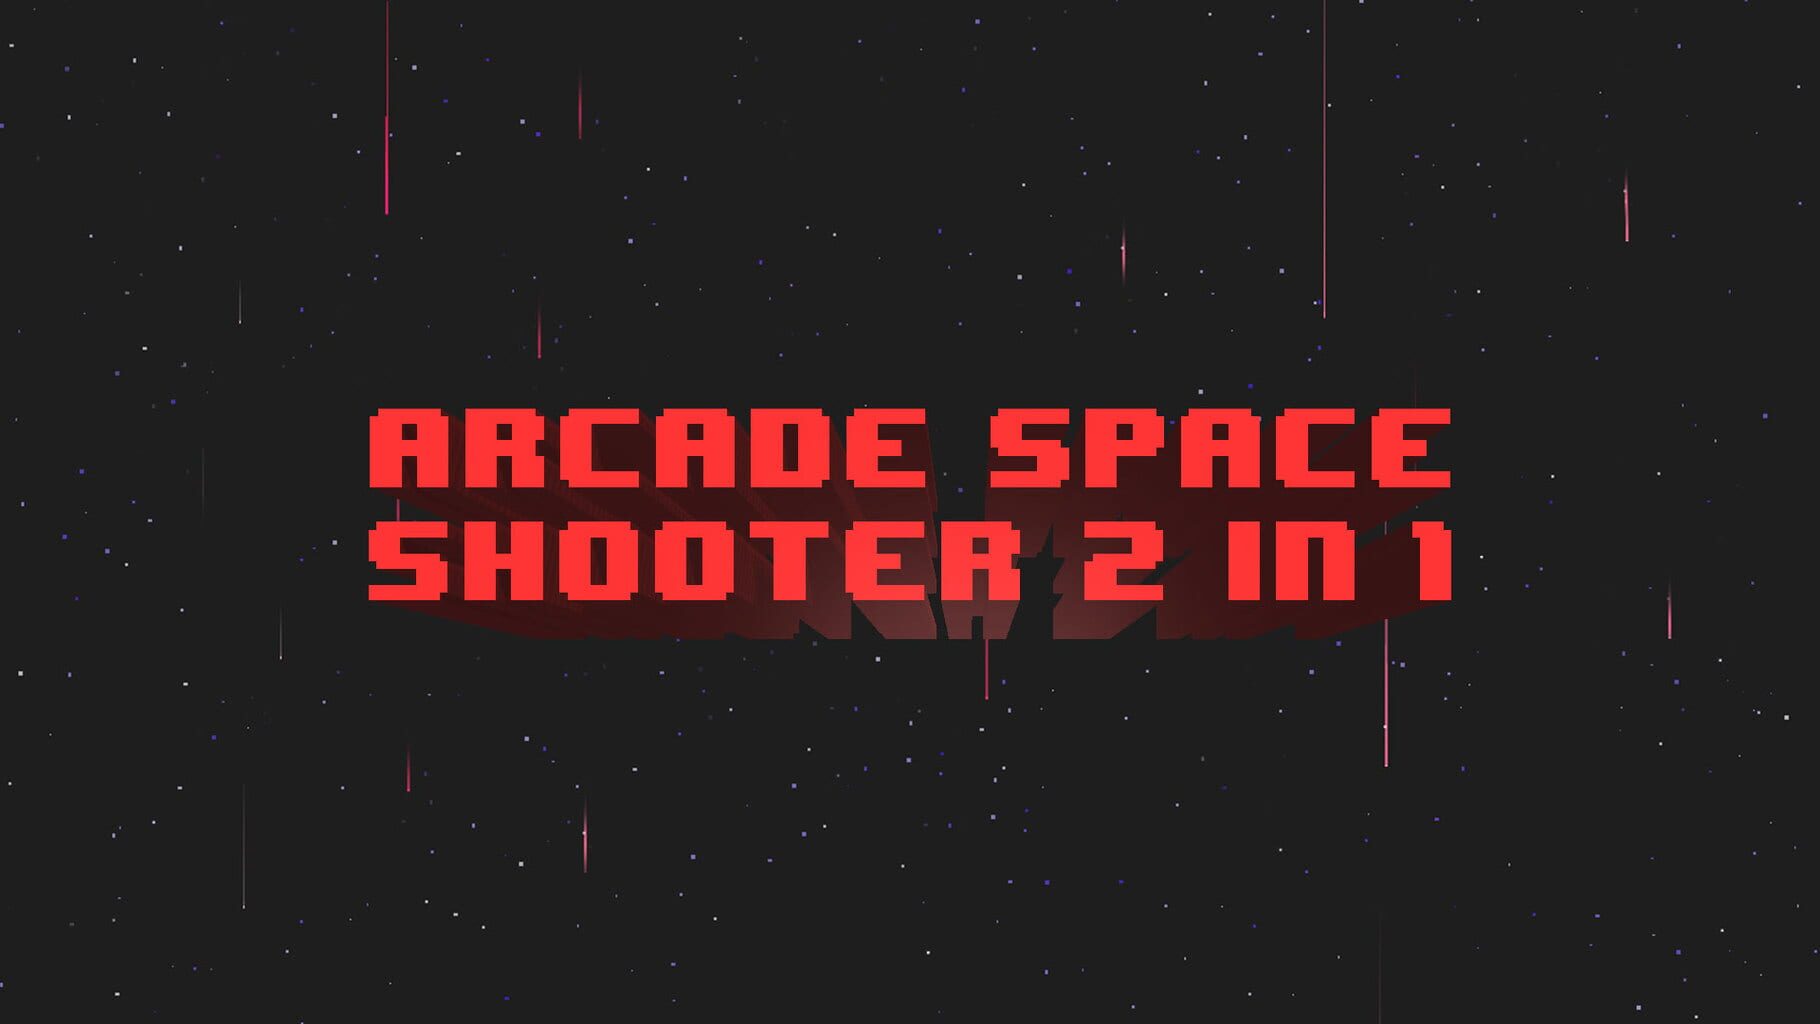 Arcade Space Shooter 2 in 1 artwork